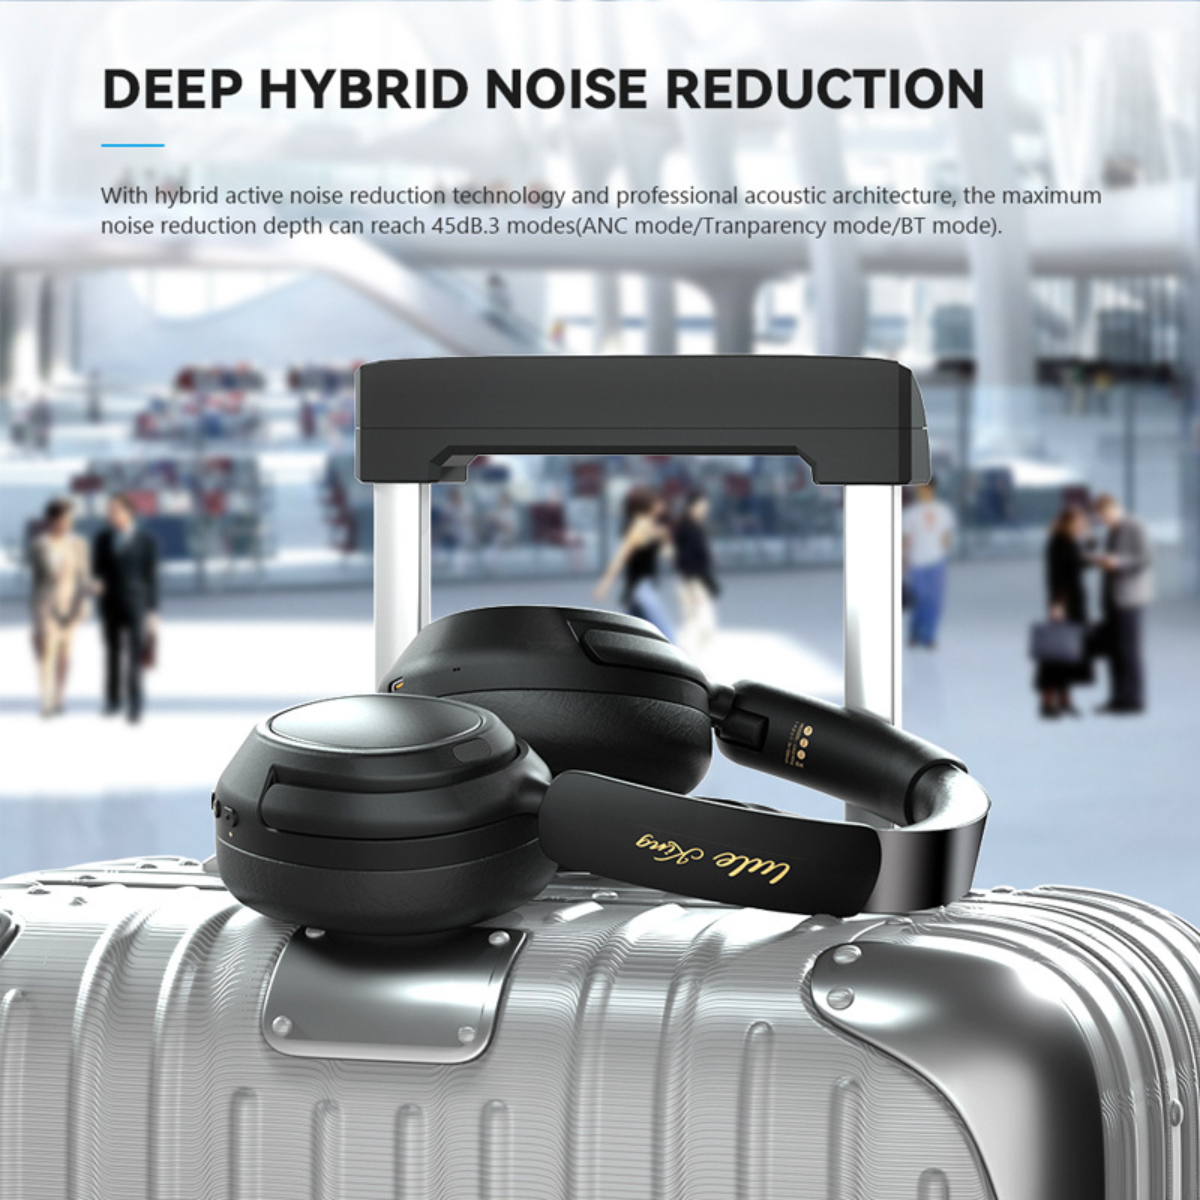 SYNTEK Eisenhaltig drahtloses geräuschunterdrückender Over-ear Kopfbügel, Latenz, Eisenhaltig Bluetooth-Kopfhörer niedrige Bluetooth Bluetooth-Headset 